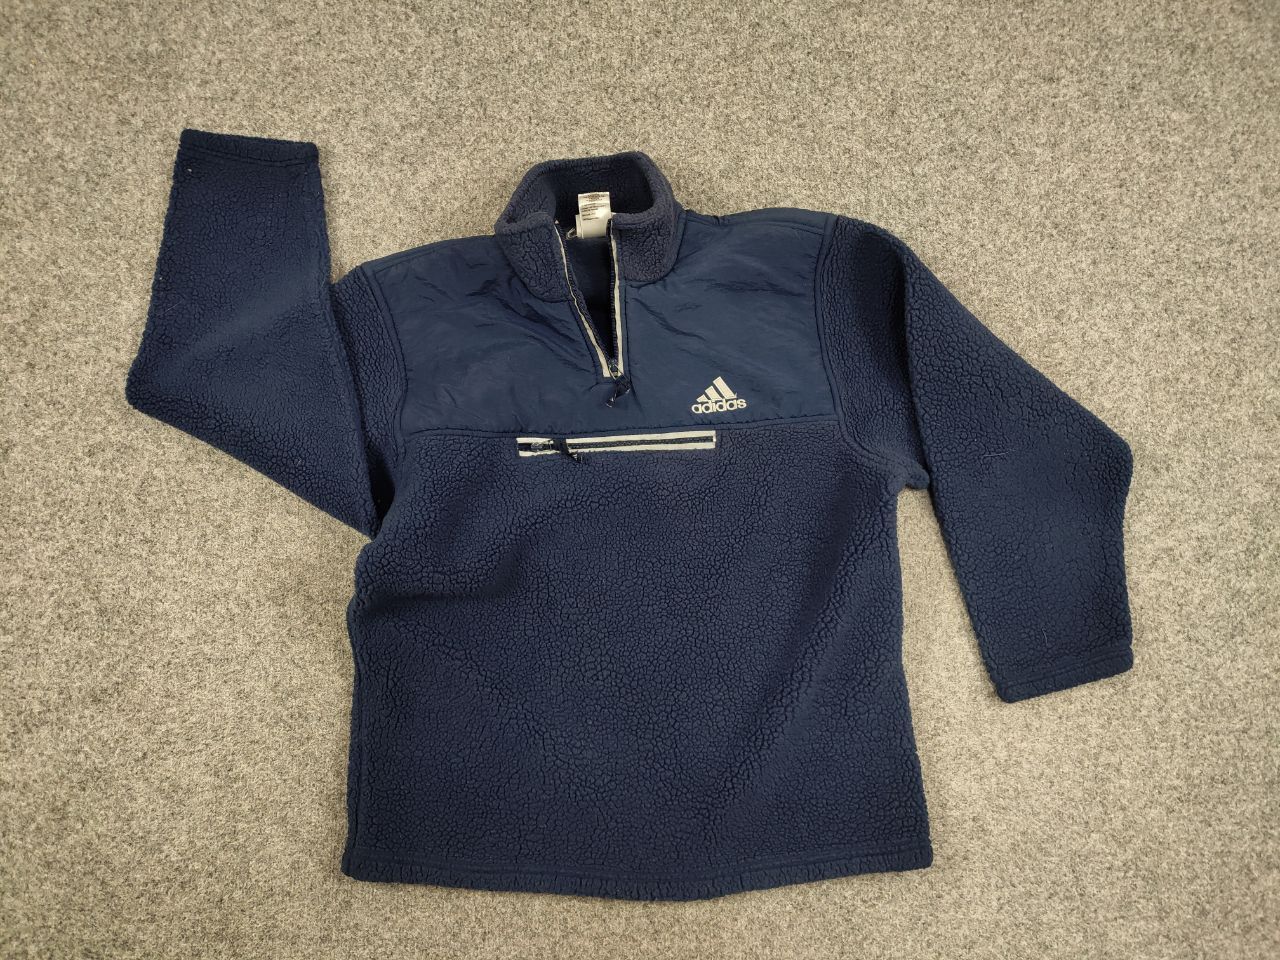 Adidas Vintage 90's Adidas Teddy Fleece Dark Zip Pullover Jacket Size US M / EU 48-50 / 2 - 7 Thumbnail